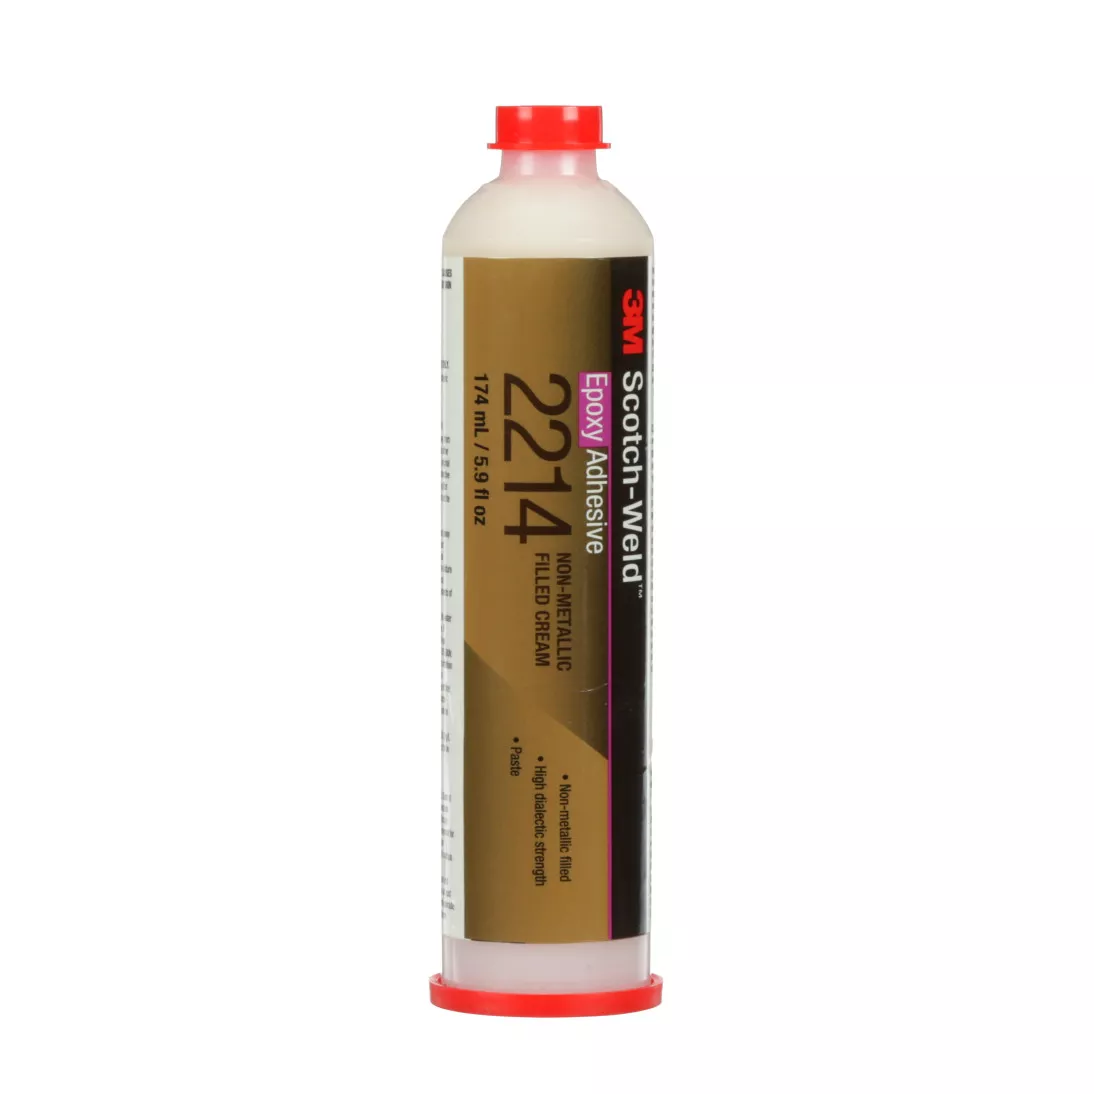 3M™ Scotch-Weld™ Epoxy Adhesive 2214 Non-Metallic Filled, Cream, 6 fl oz
Cartridge, 4/case